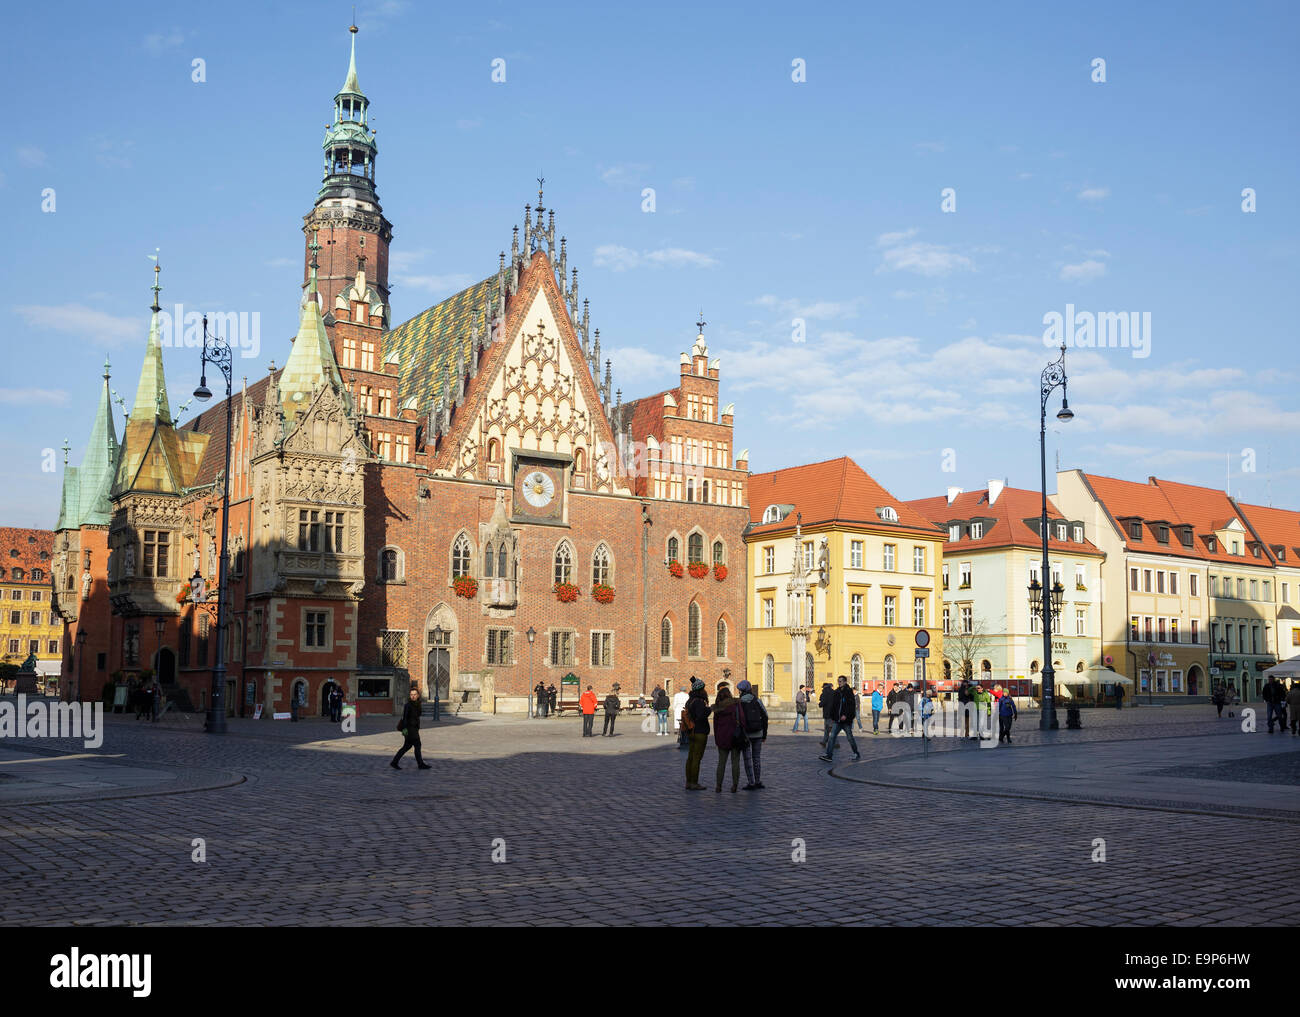 Market Square with Old Town Hall - Rynek we Wrocławiu, Wroclaw, Poland Stock Photo